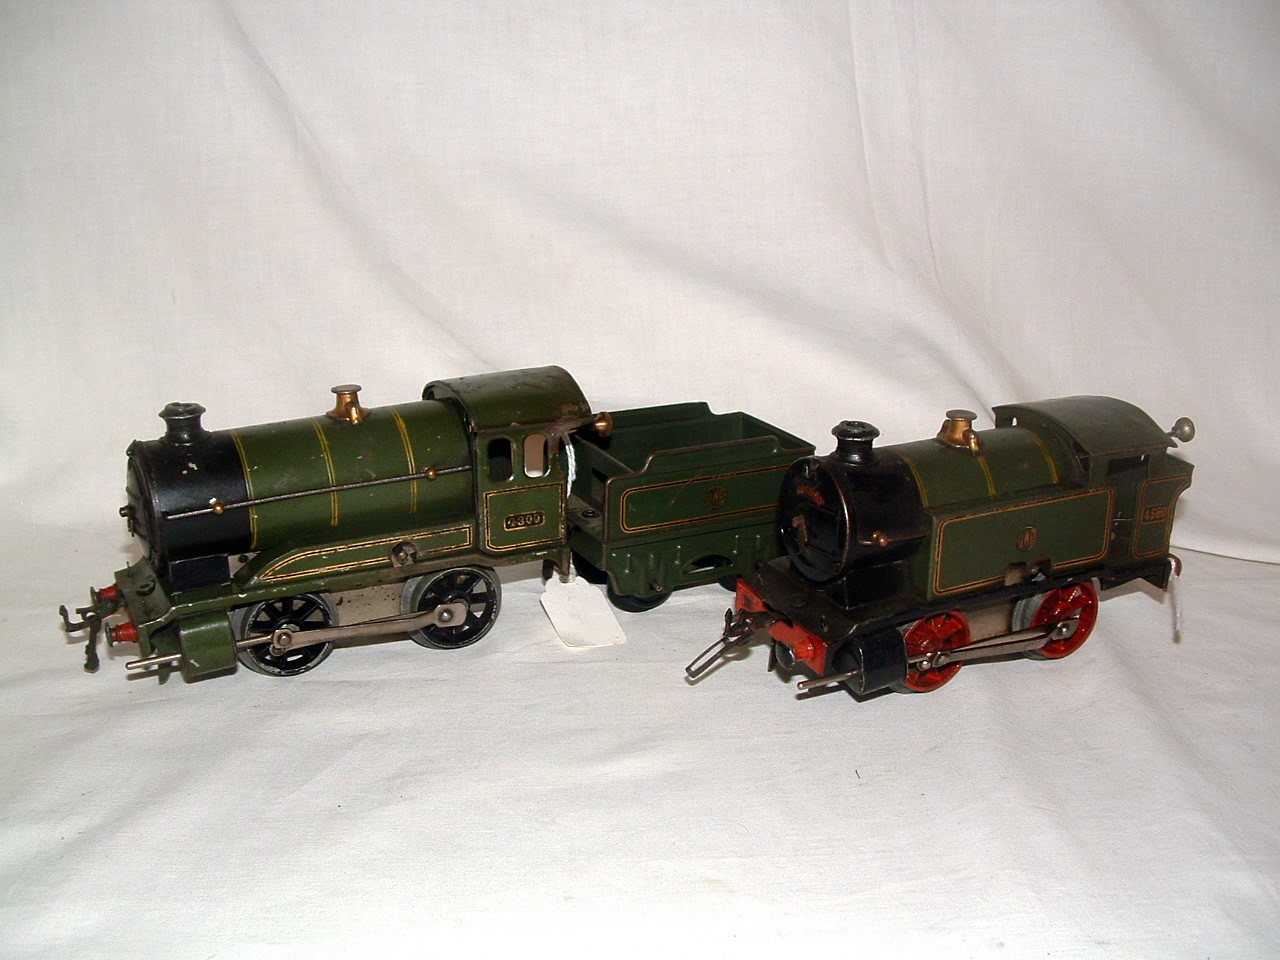 HORNBY 0 Gauge 2 x GWR C/W Locomotives - No 1 0-4-0 Tender Locomotive no 4300 c 1938 - Green lined